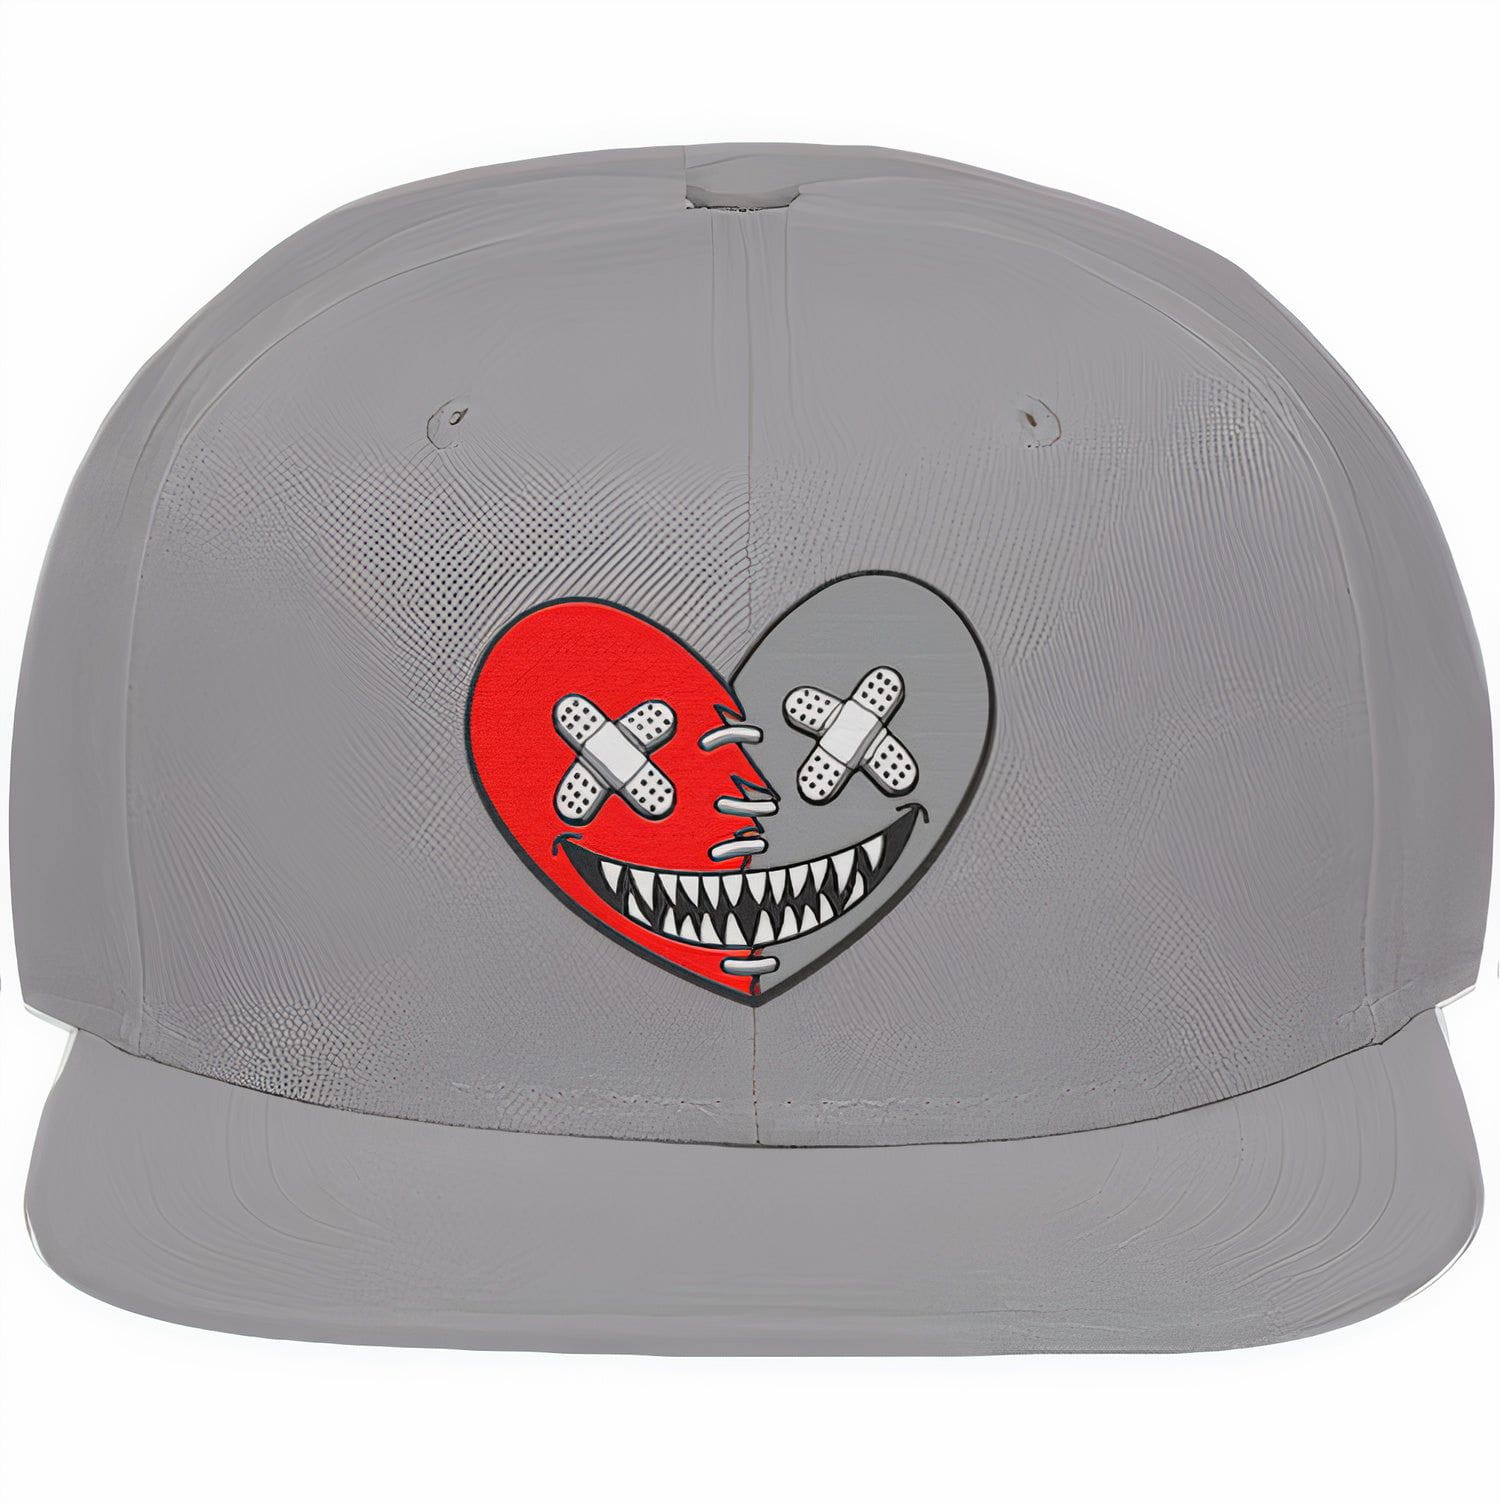 Red Cement 4s Snapback Hat - Jordan 4 Cement Hats - Heart